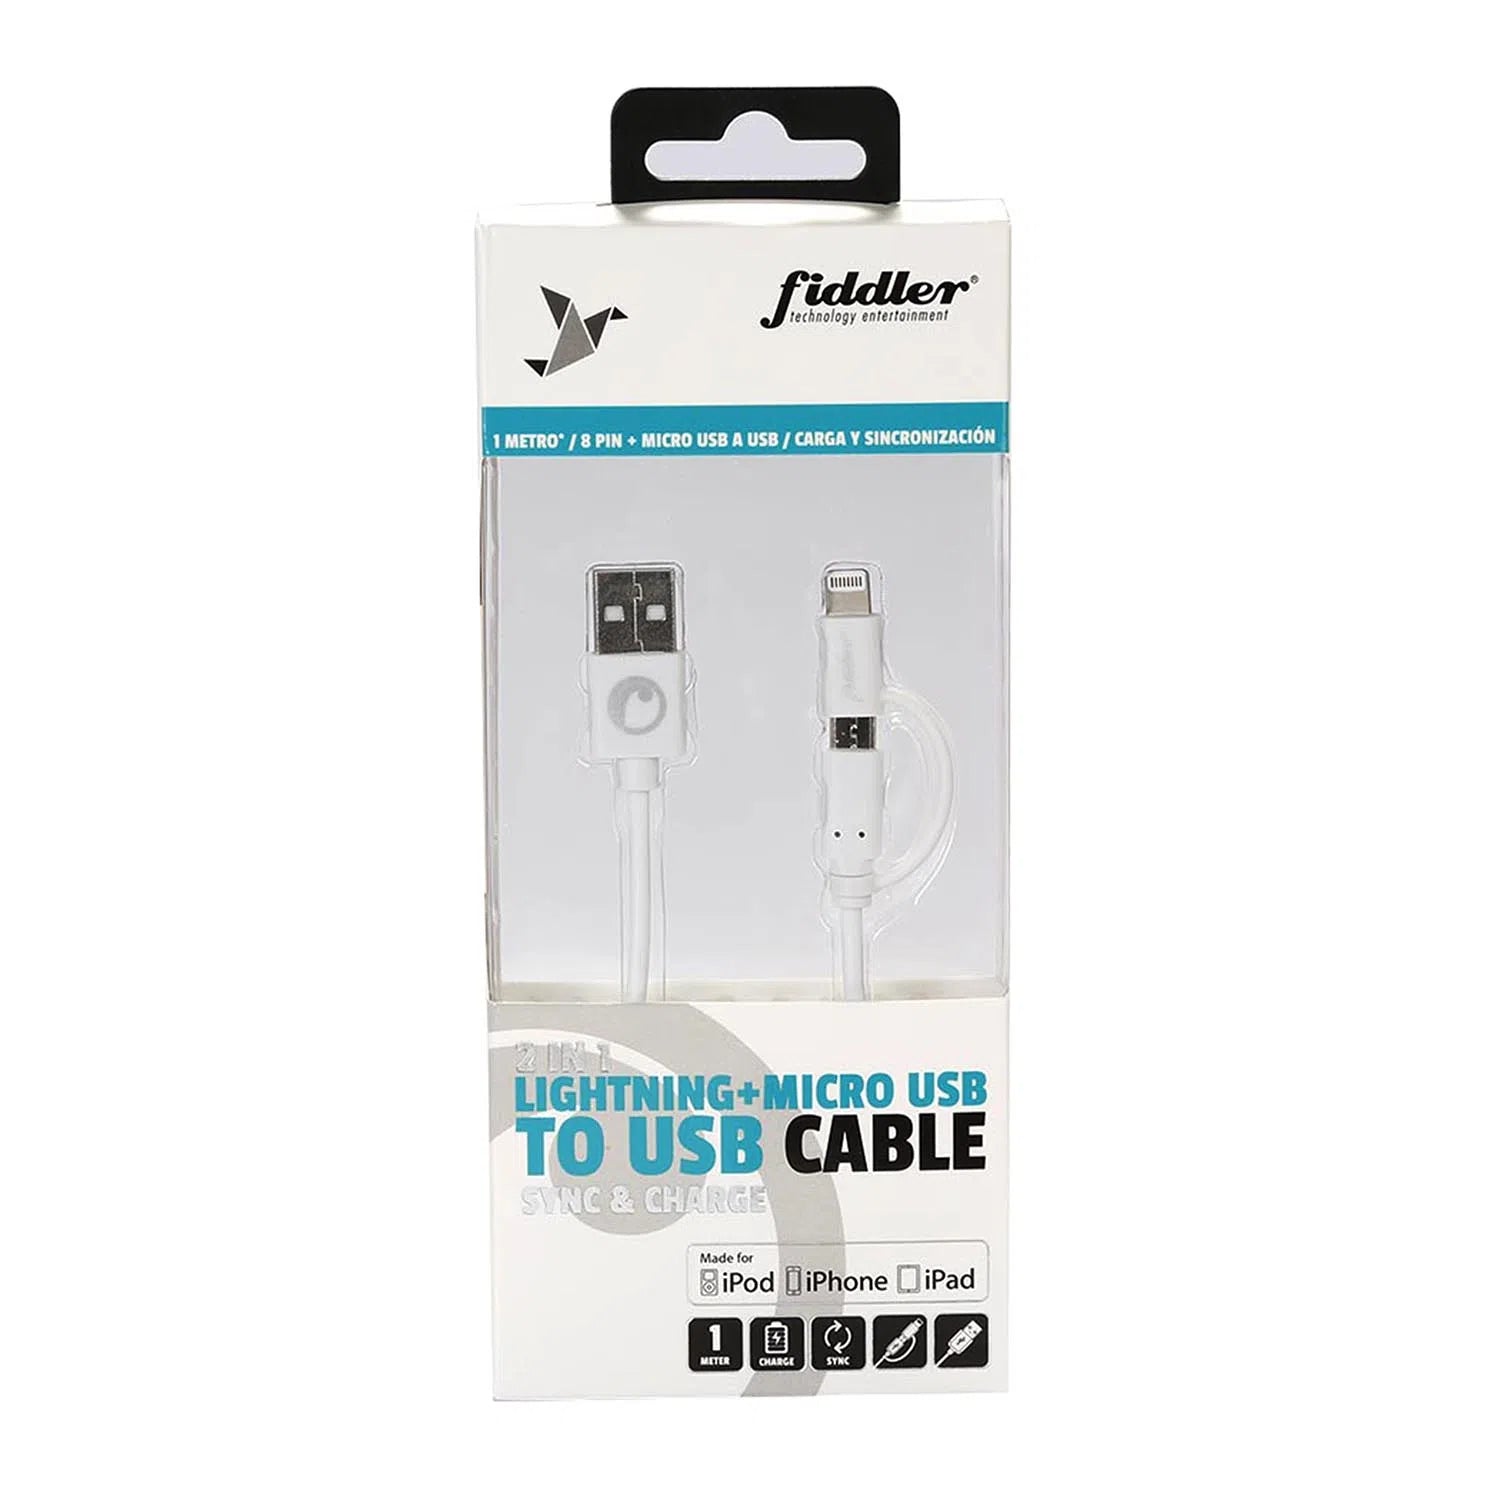 Cable de Carga USB a MicroUsb y Lightning Fiddler 2 en 1